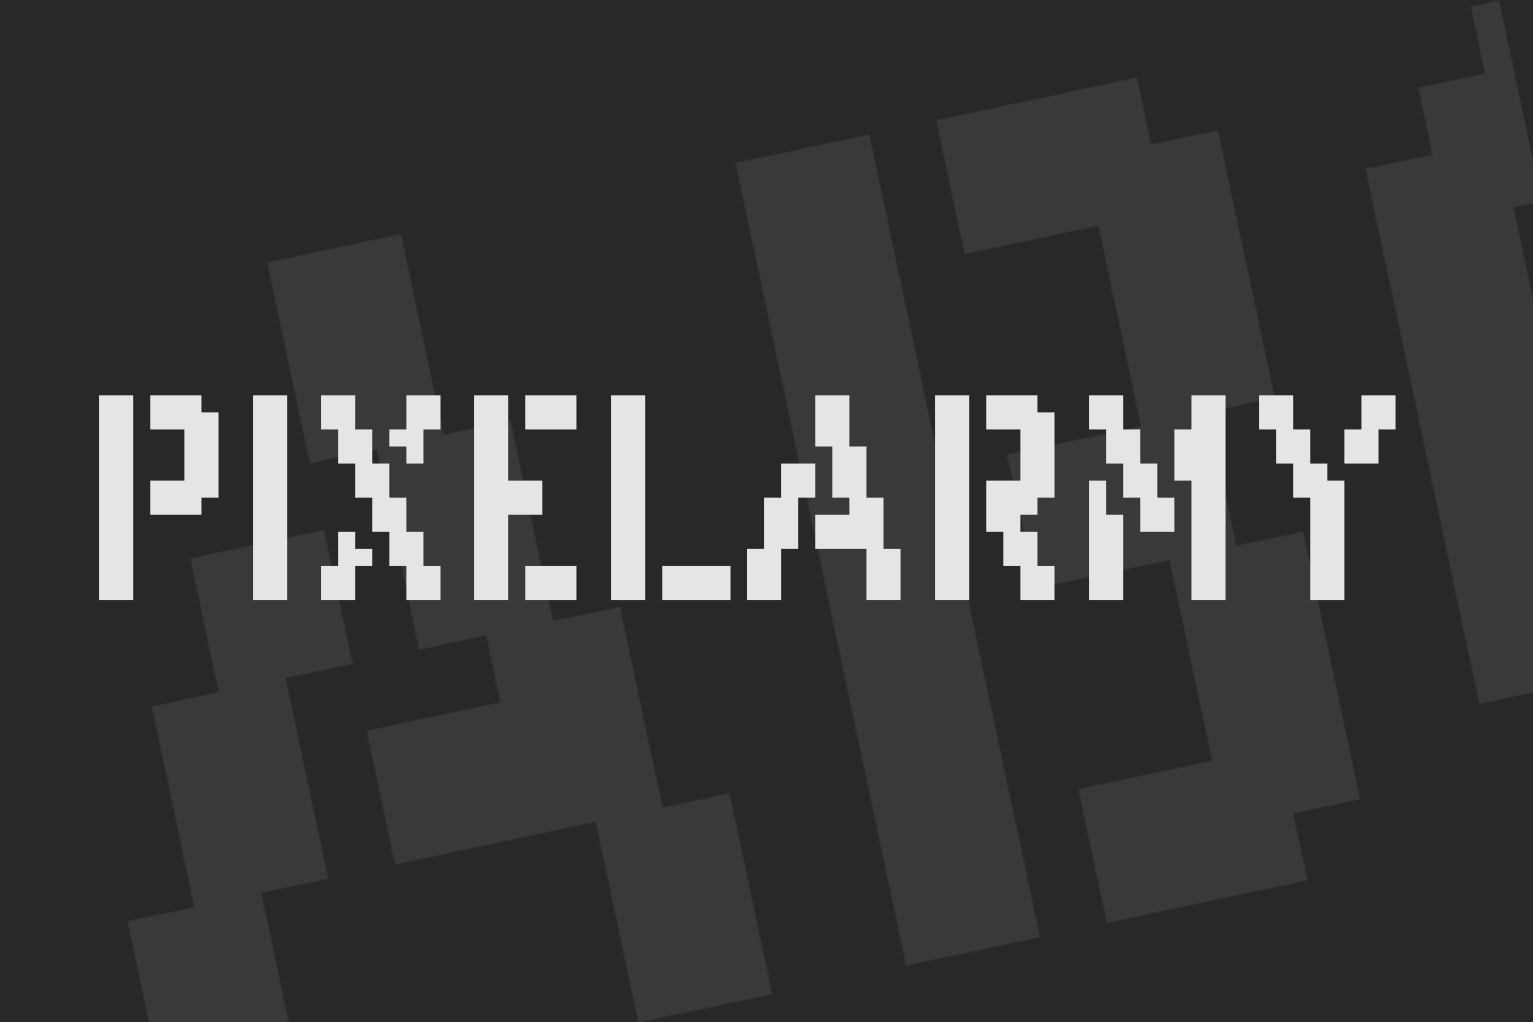 PixelArmy